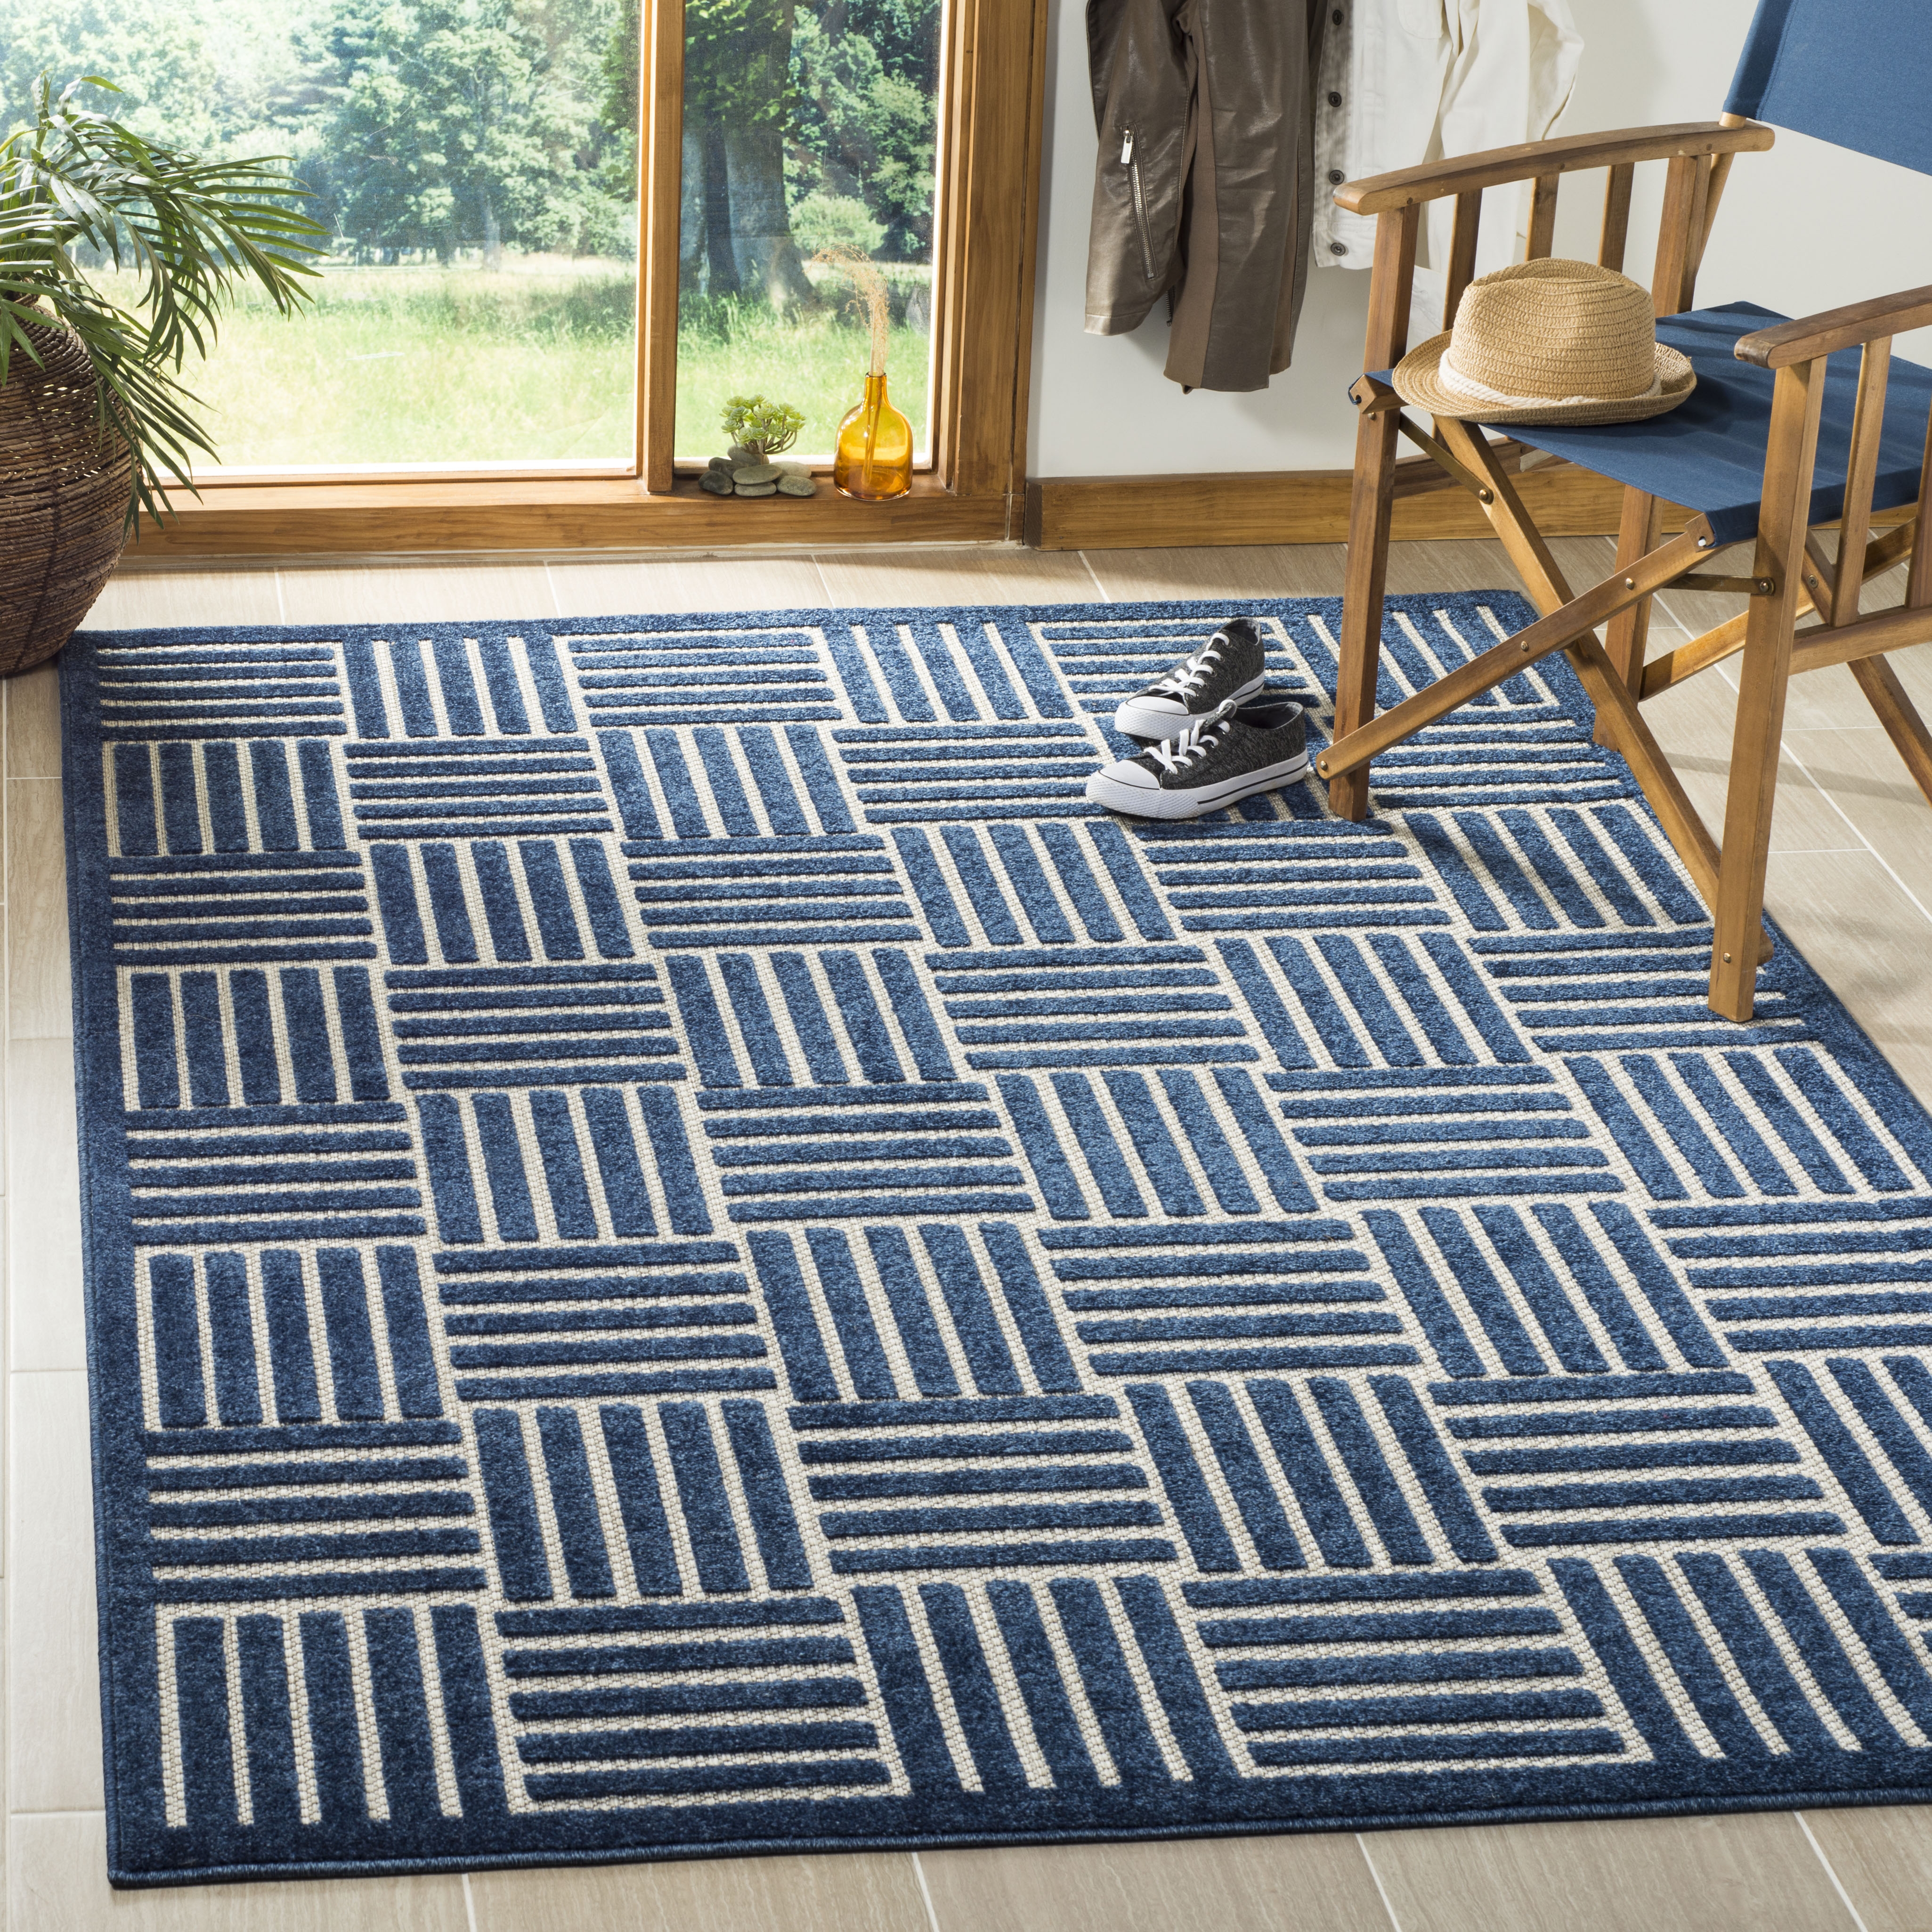 Arlo Home Indoor/Outdoor Woven Area Rug, COT942A, Blue/Grey,  5' 3" X 7' 7" - Image 1